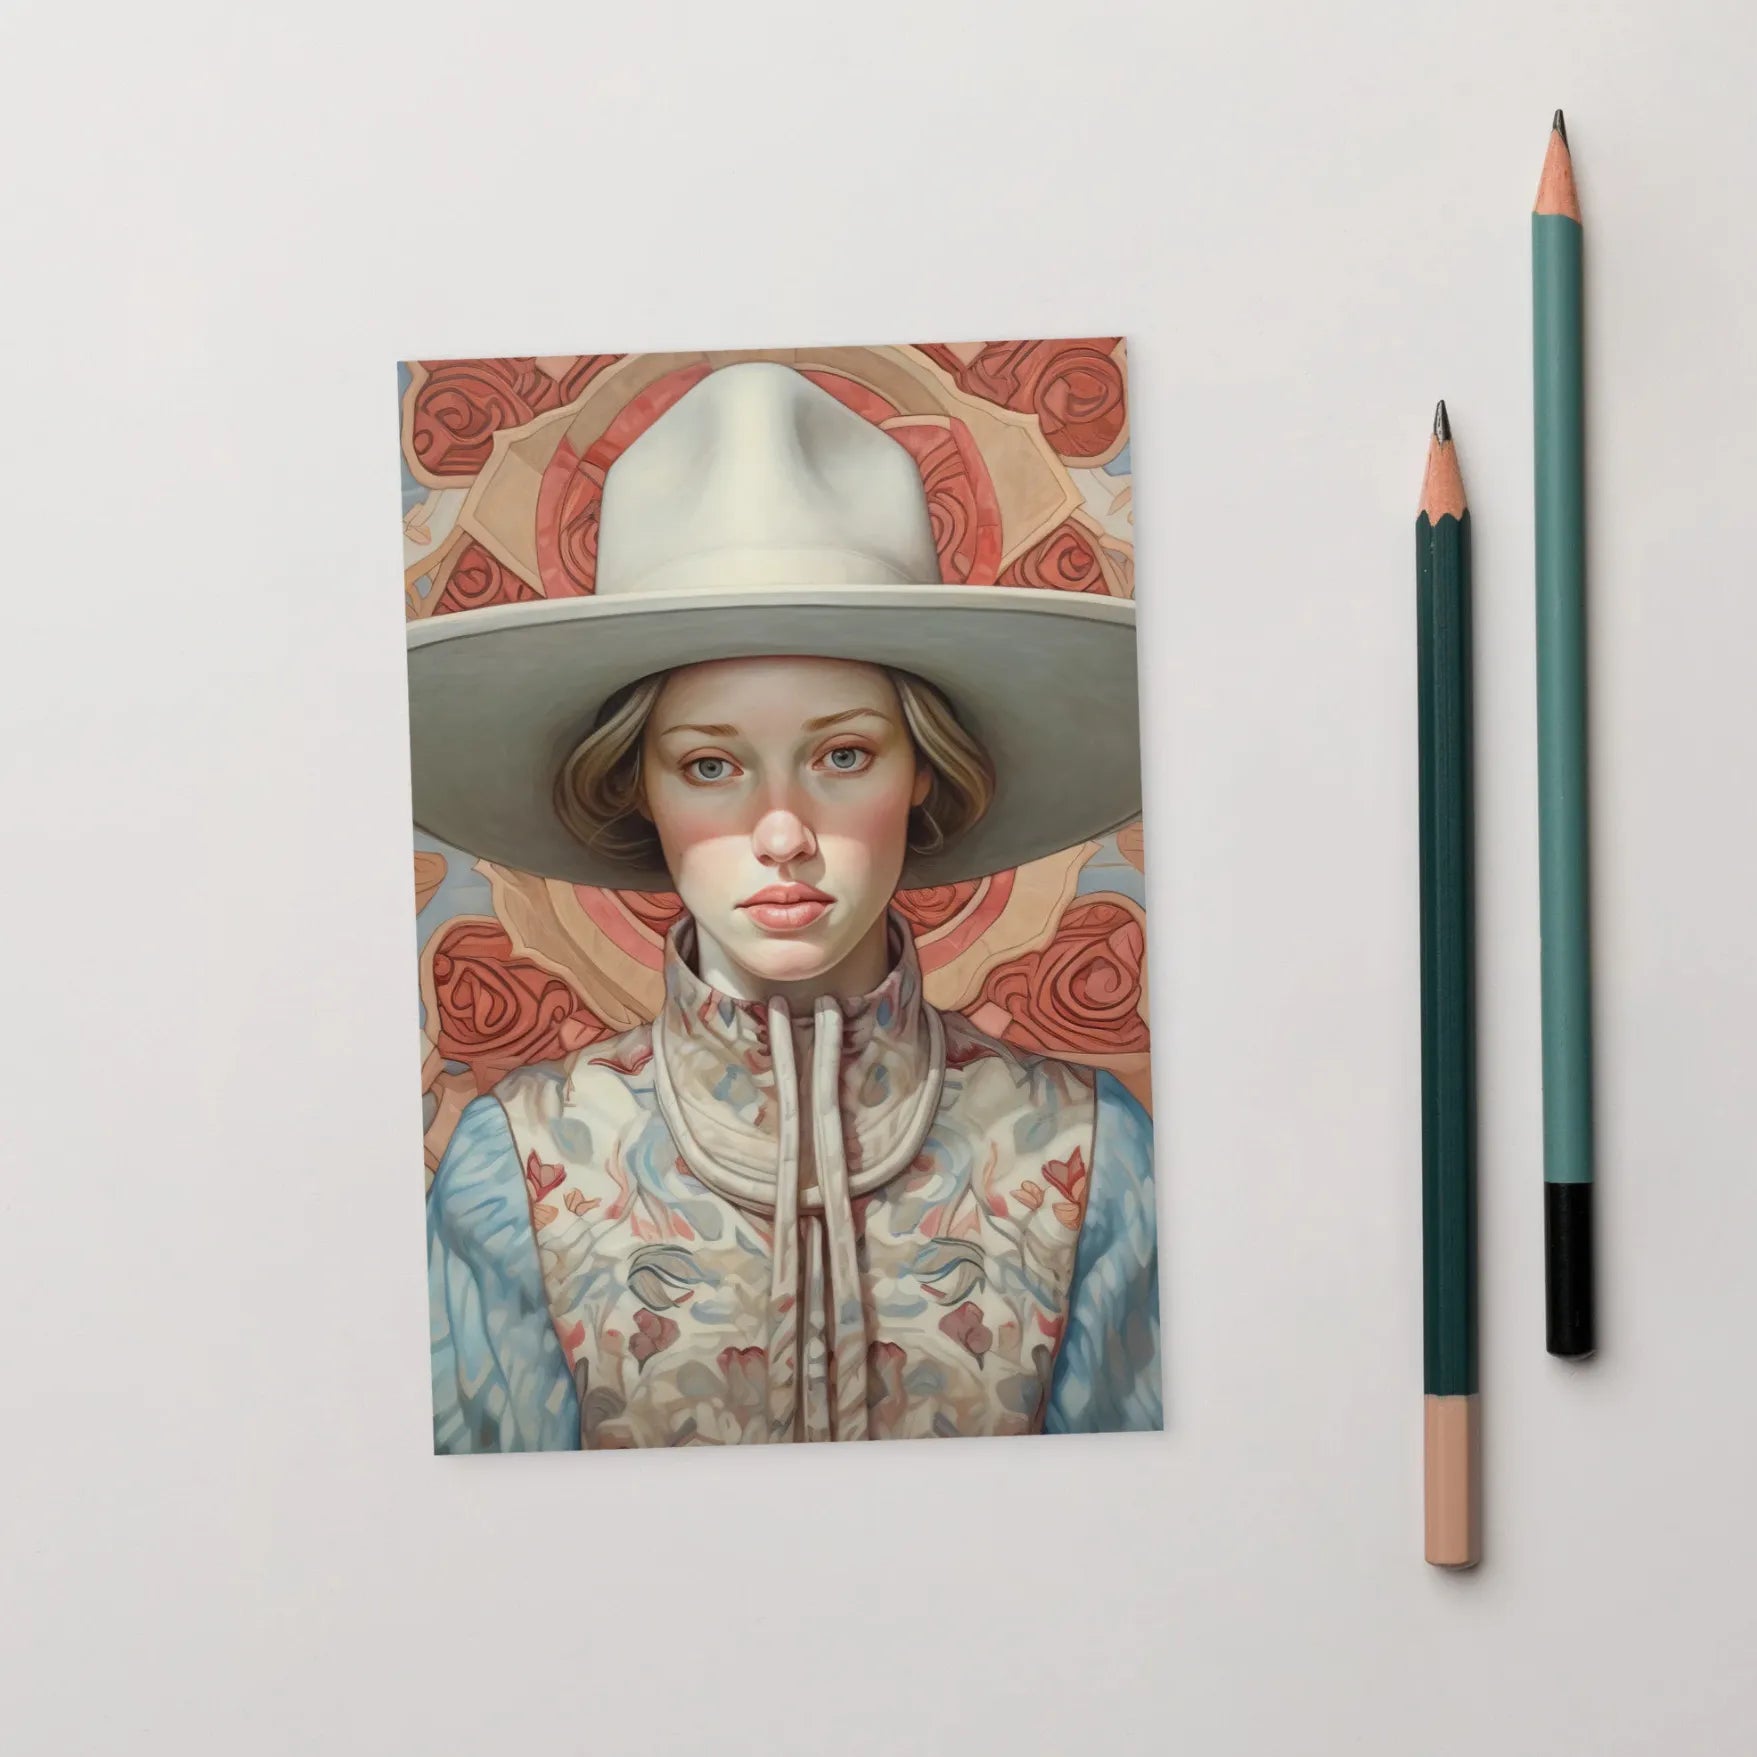 Lottie - Lesbian Cowgirl Art Print - Wlw Sapphic Femme - 4’x6’ - Posters Prints & Visual Artwork - Aesthetic Art